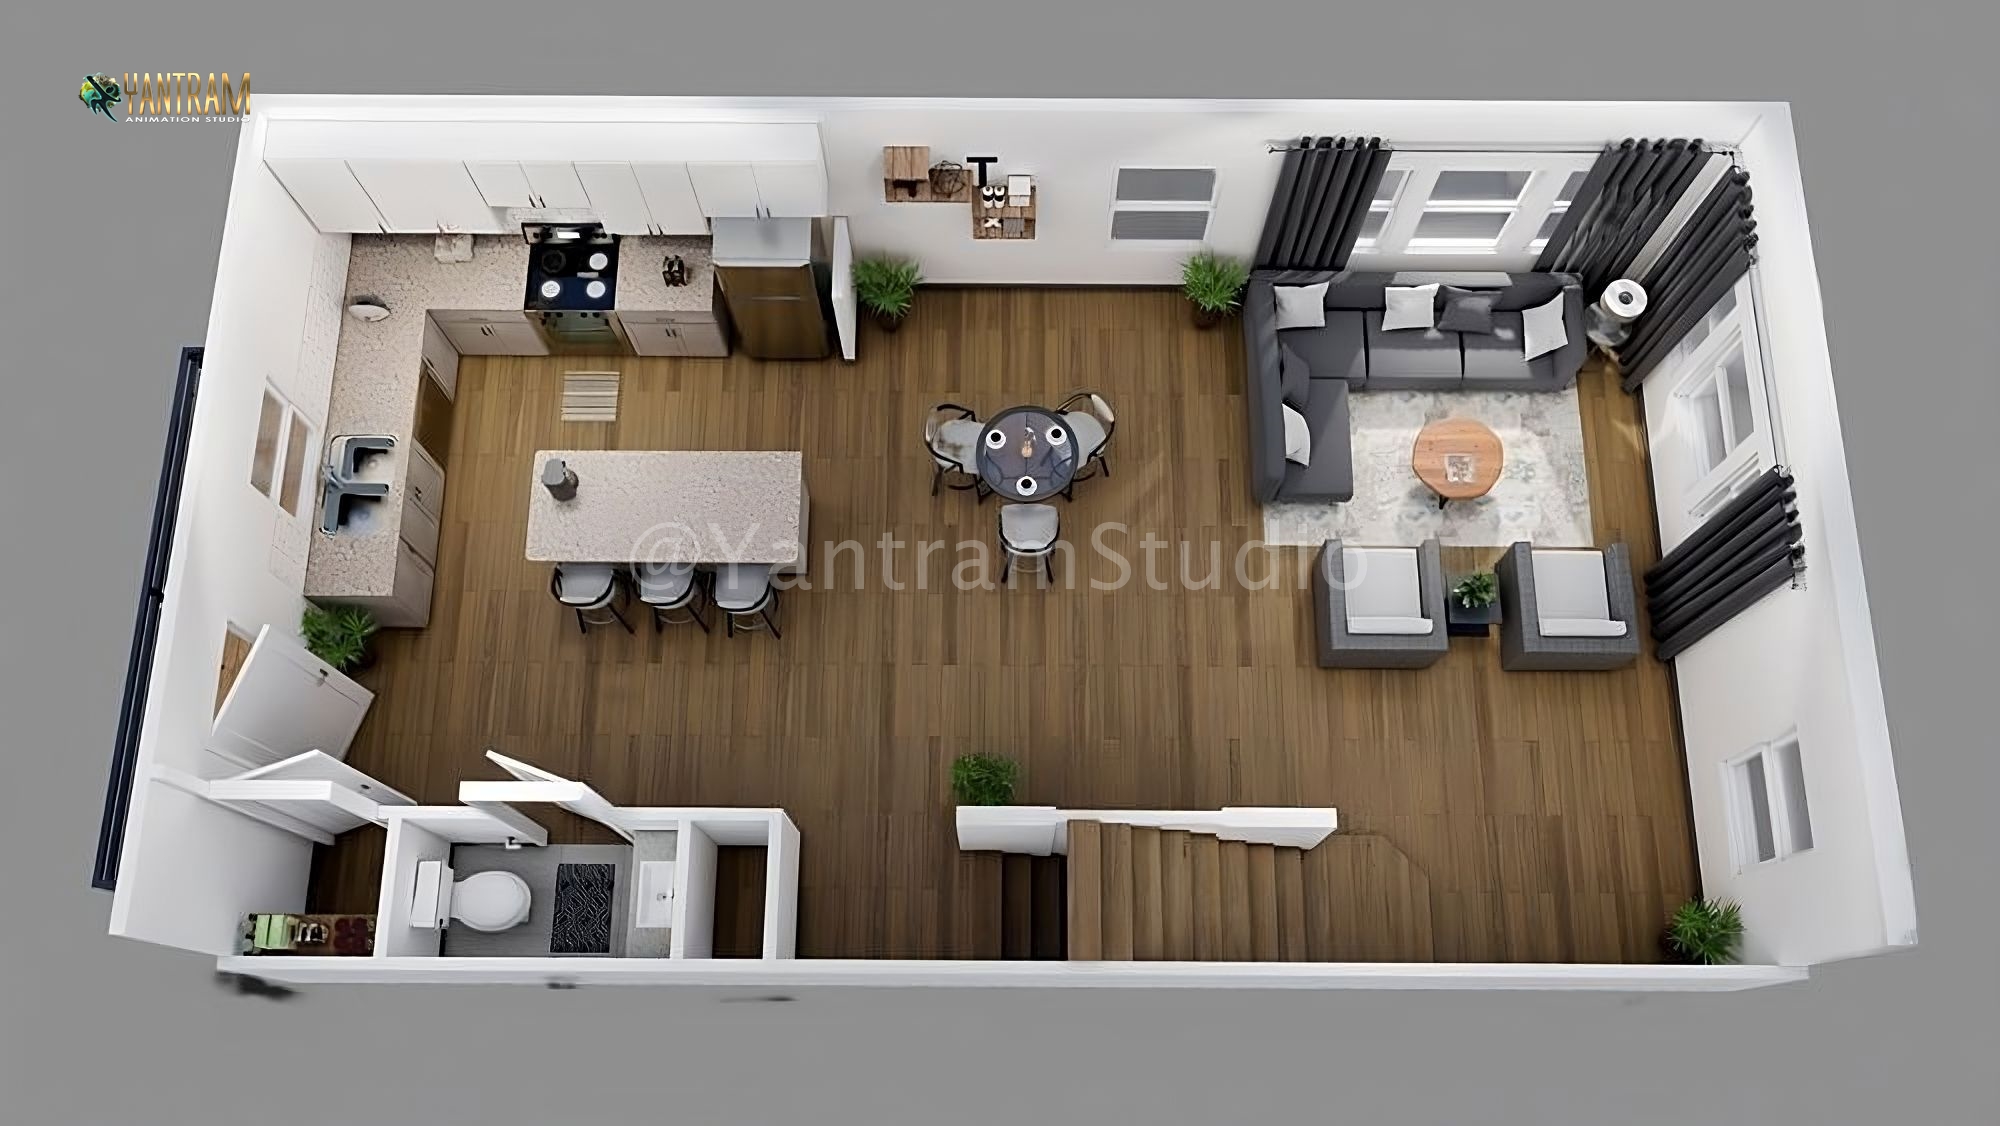 unit-9-second-floor-transformed-transformed.jpg -  by Yantramarchitecturaldesignstudio